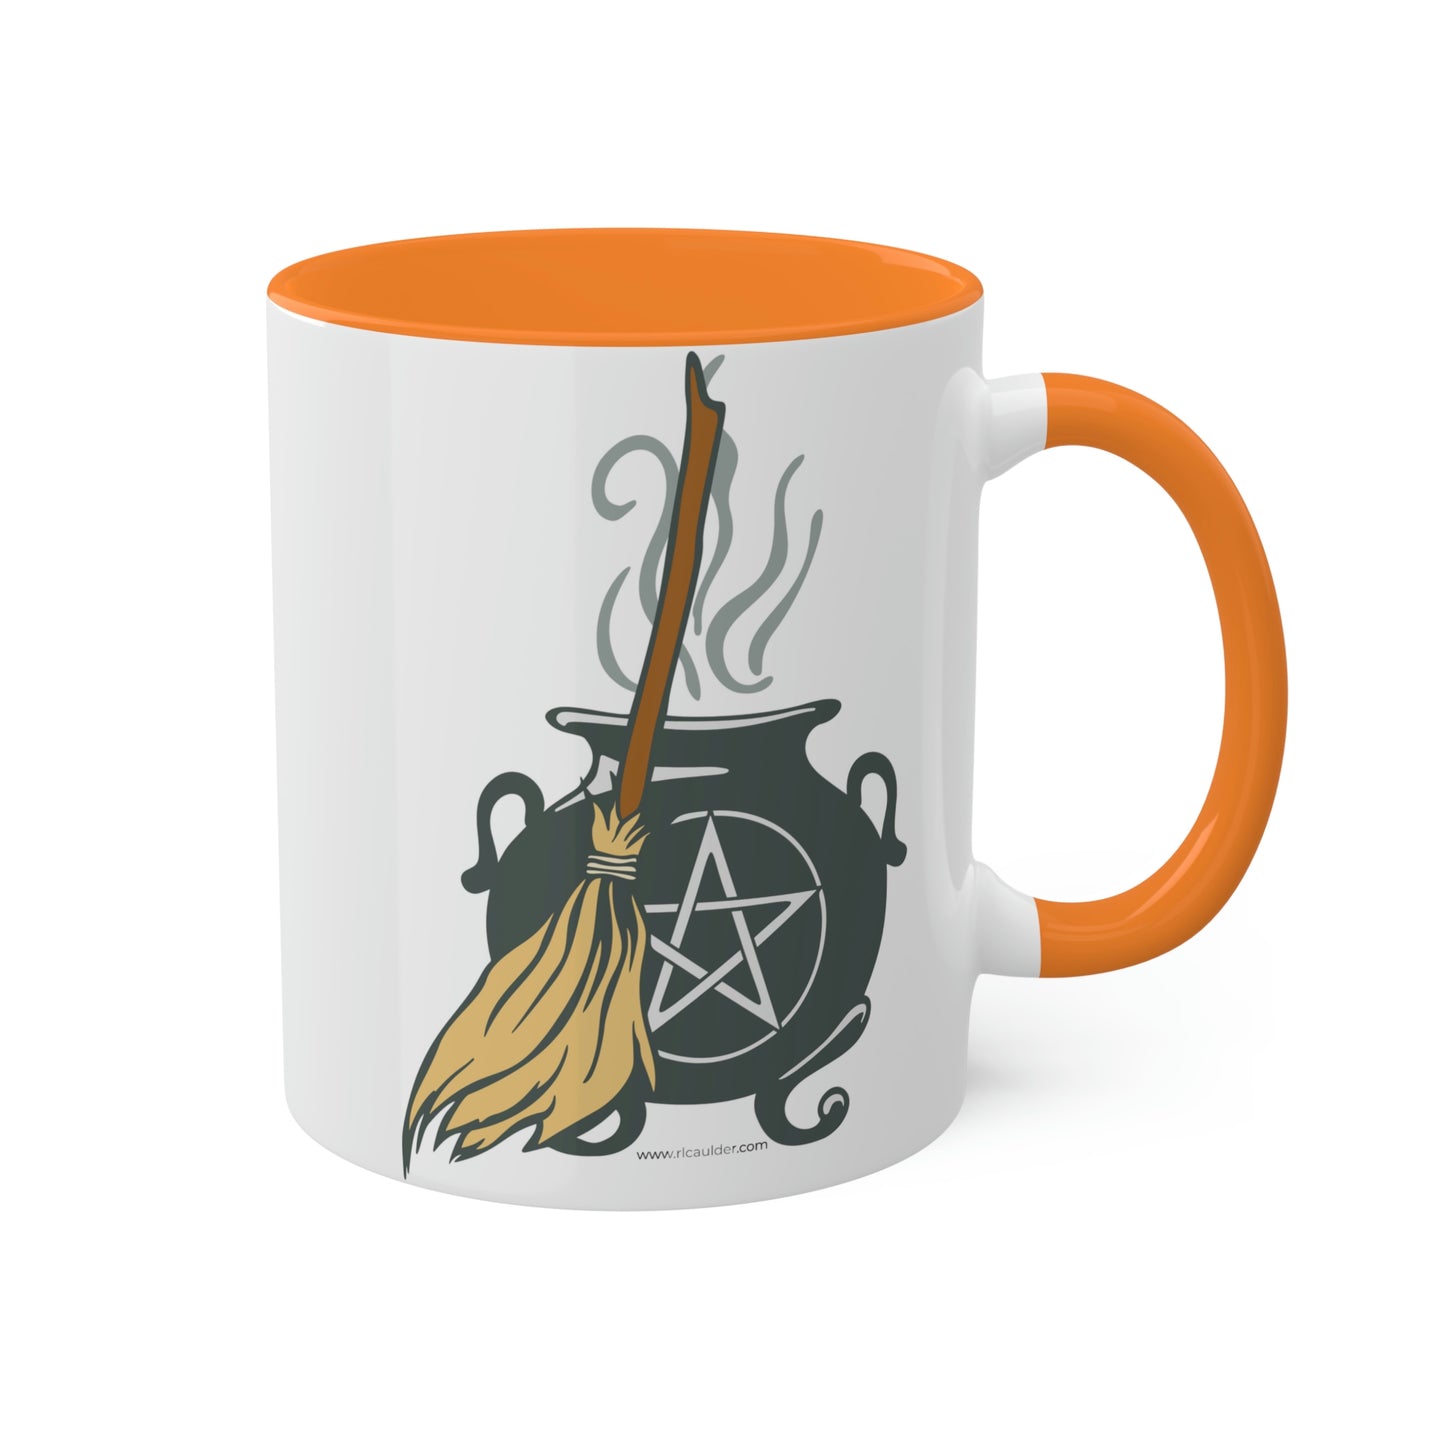 The Cauldron Mug 11oz